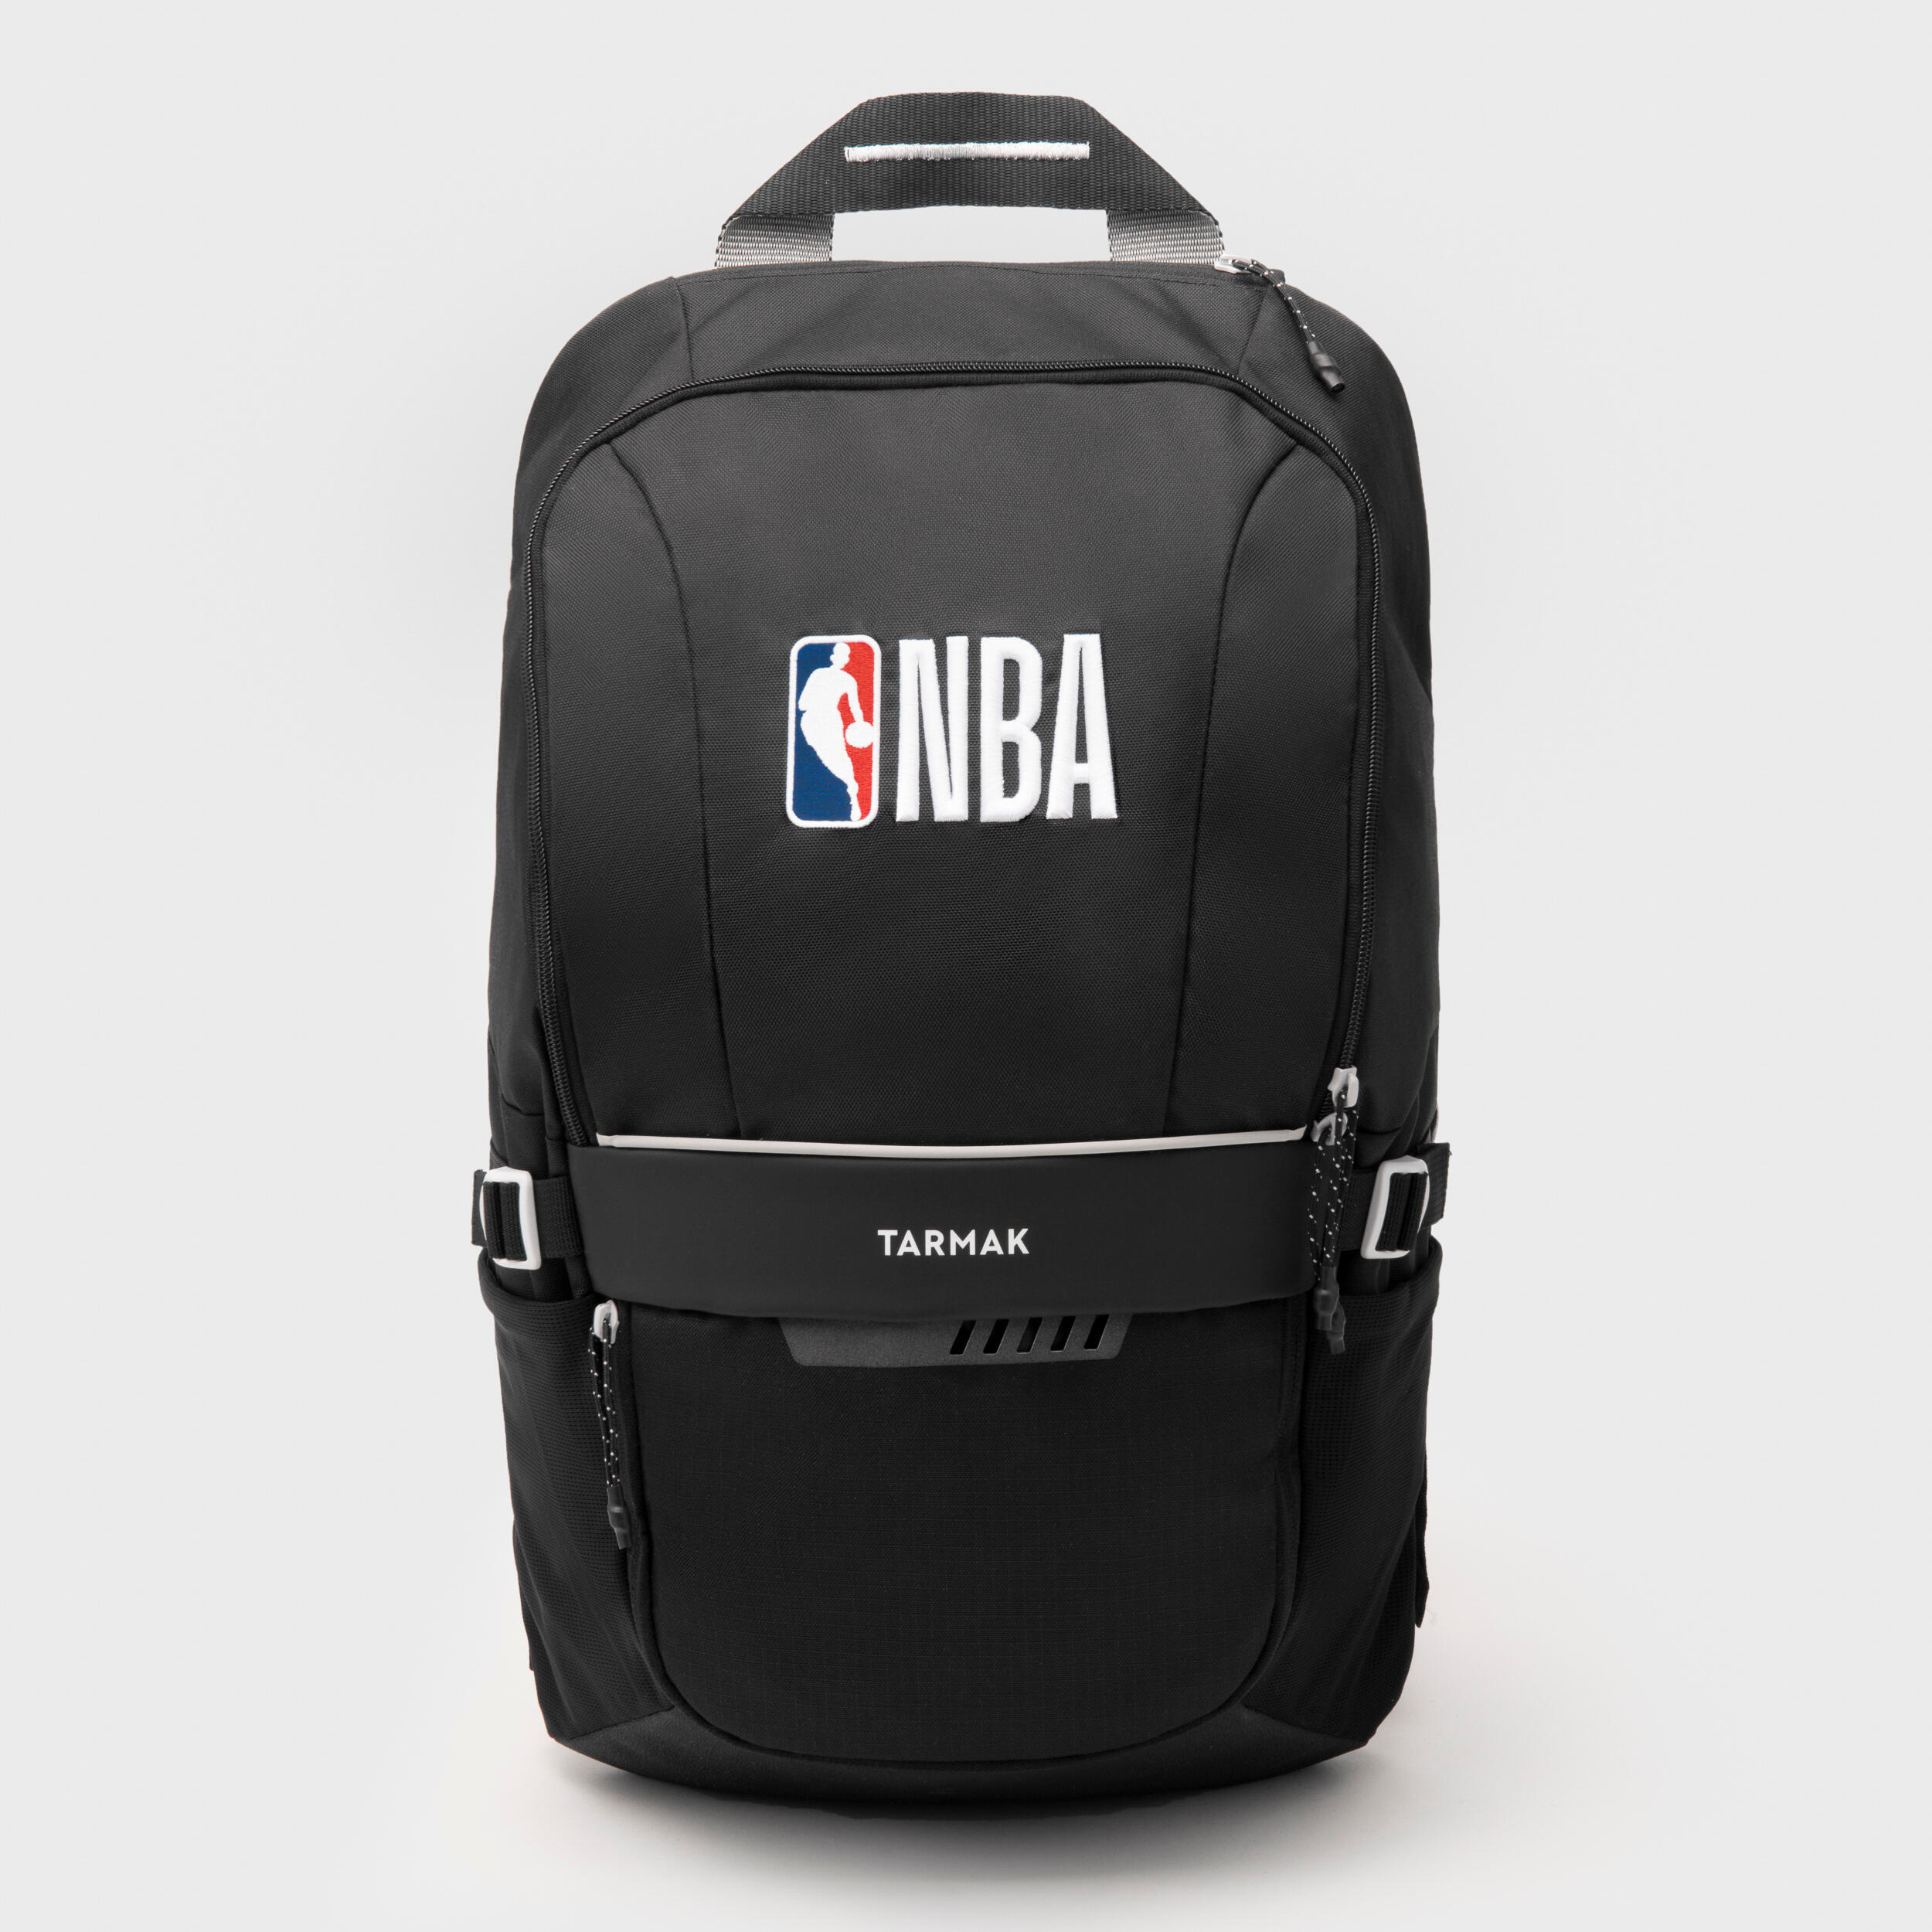 21 great back-to-school backpacks for NBA fans - SBNation.com